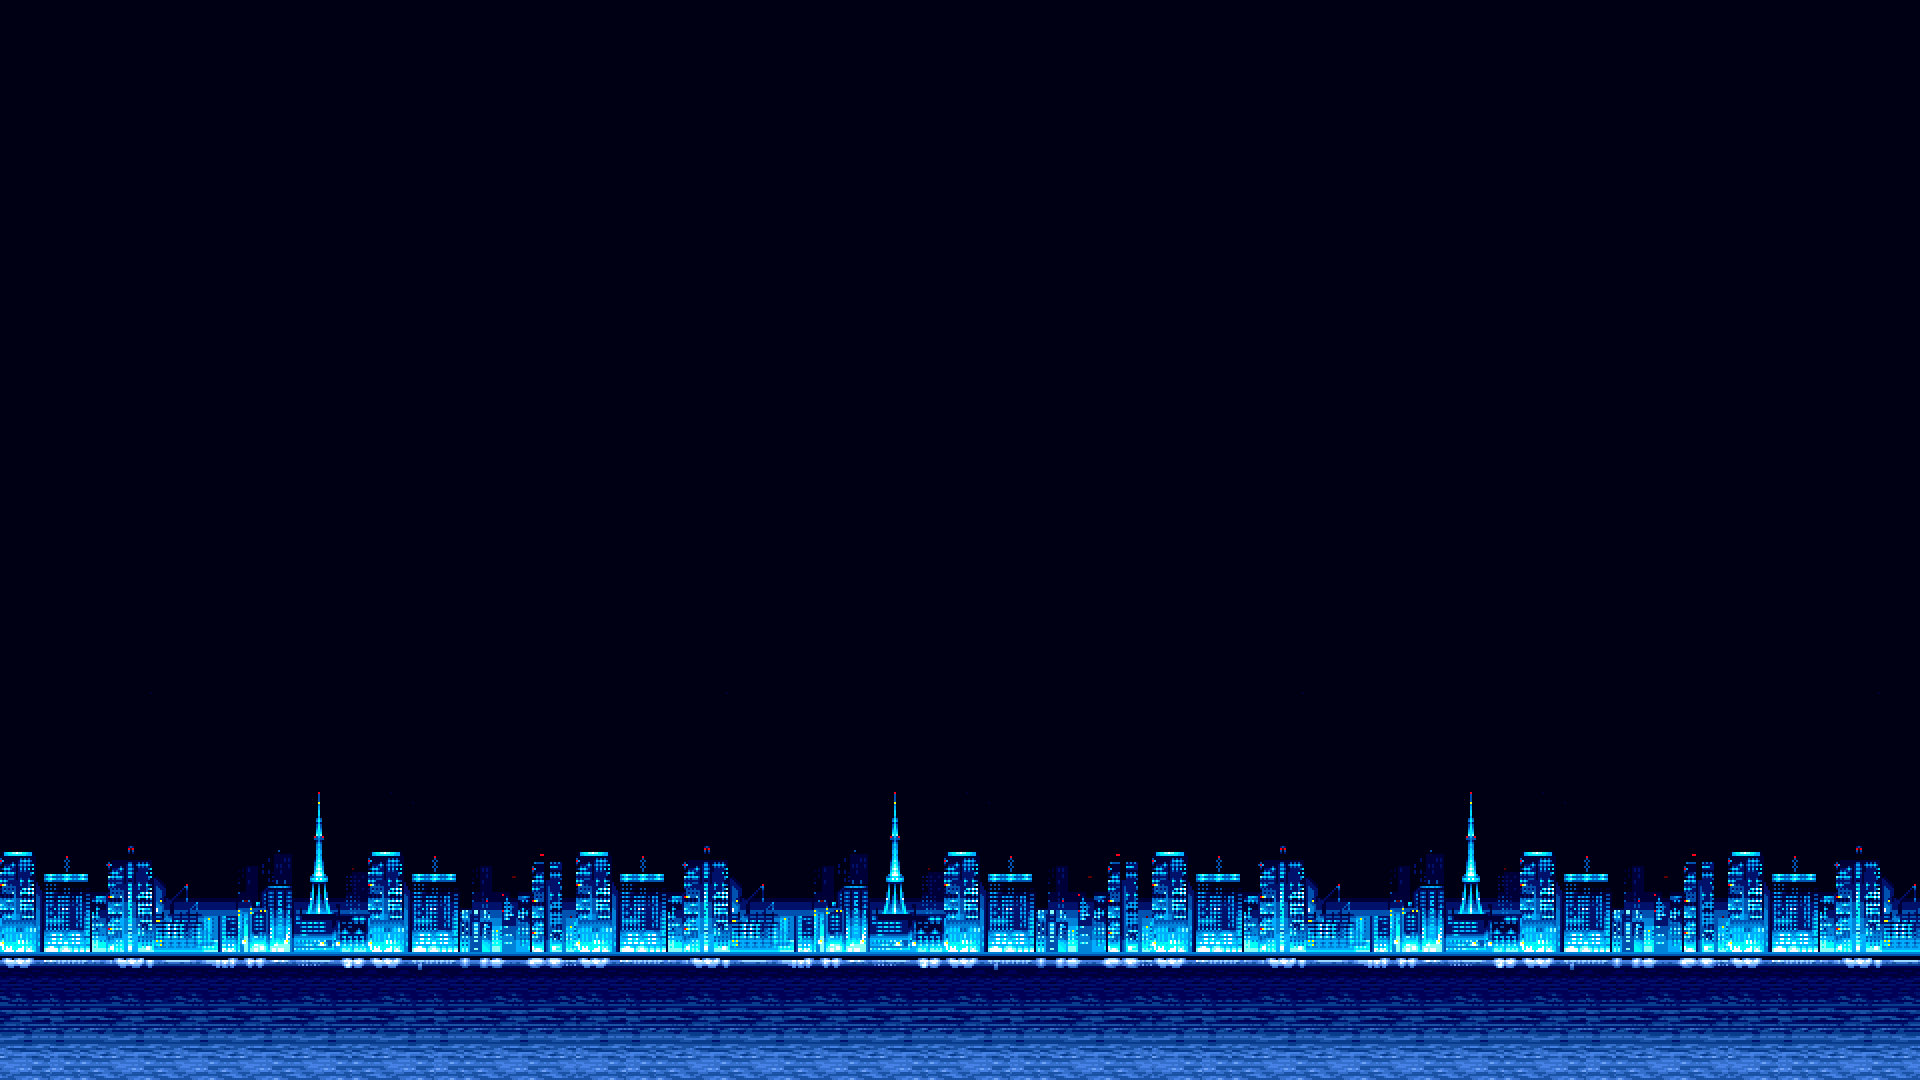 8 Bit City Background - HD Wallpaper 